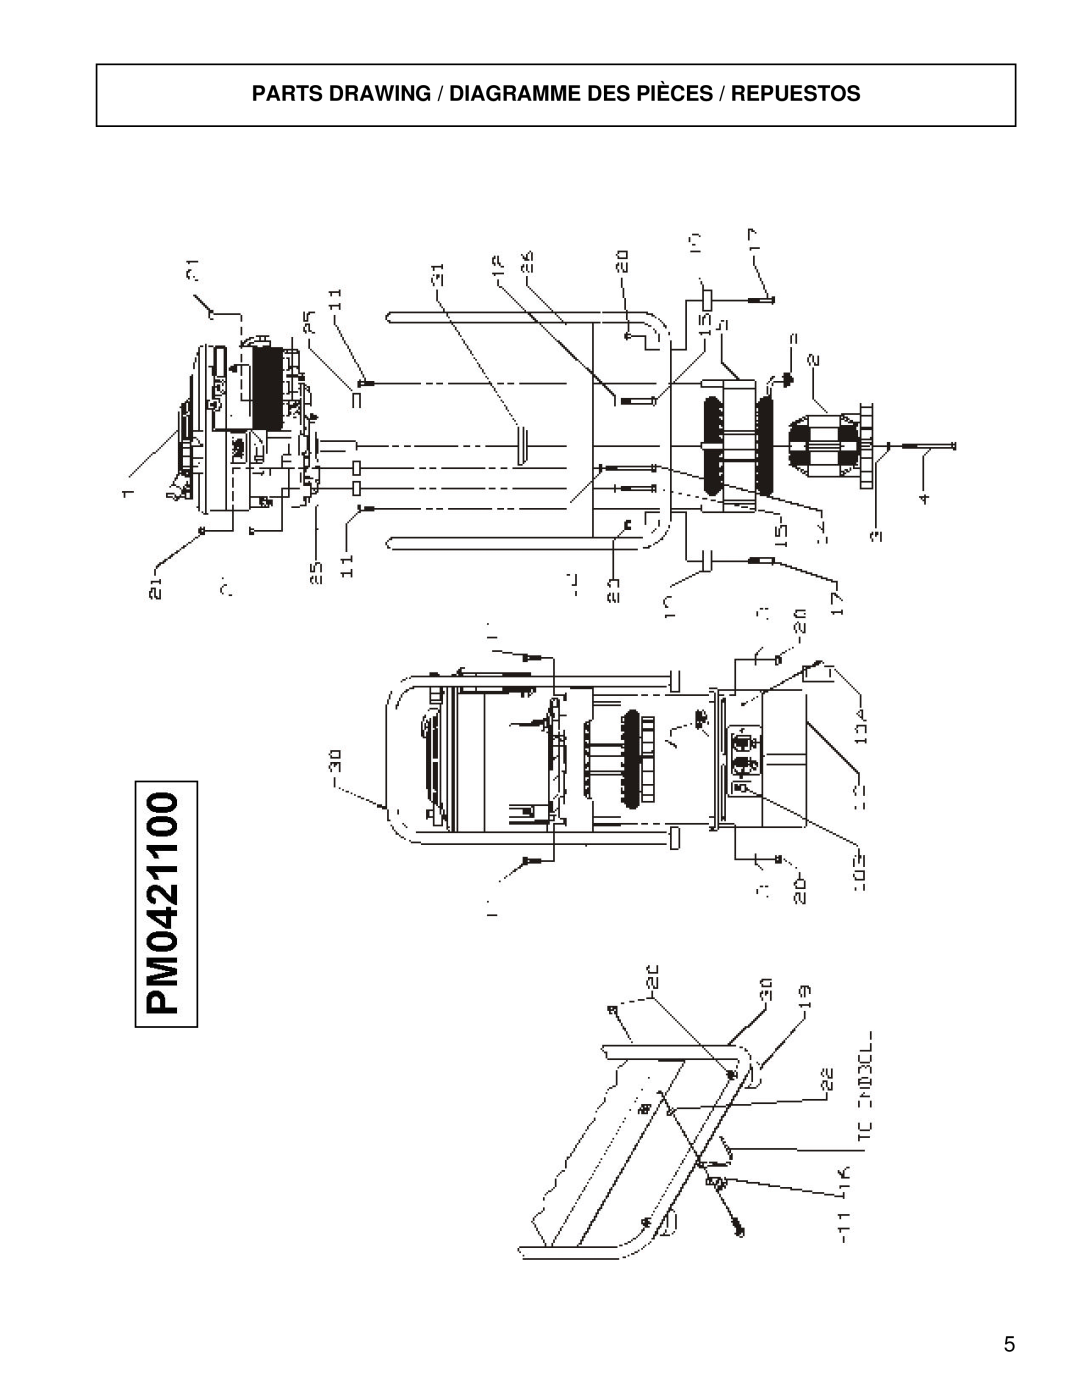 Powermate PM0421100 manual Parts Drawing / Diagramme Des Pièces / Repuestos 